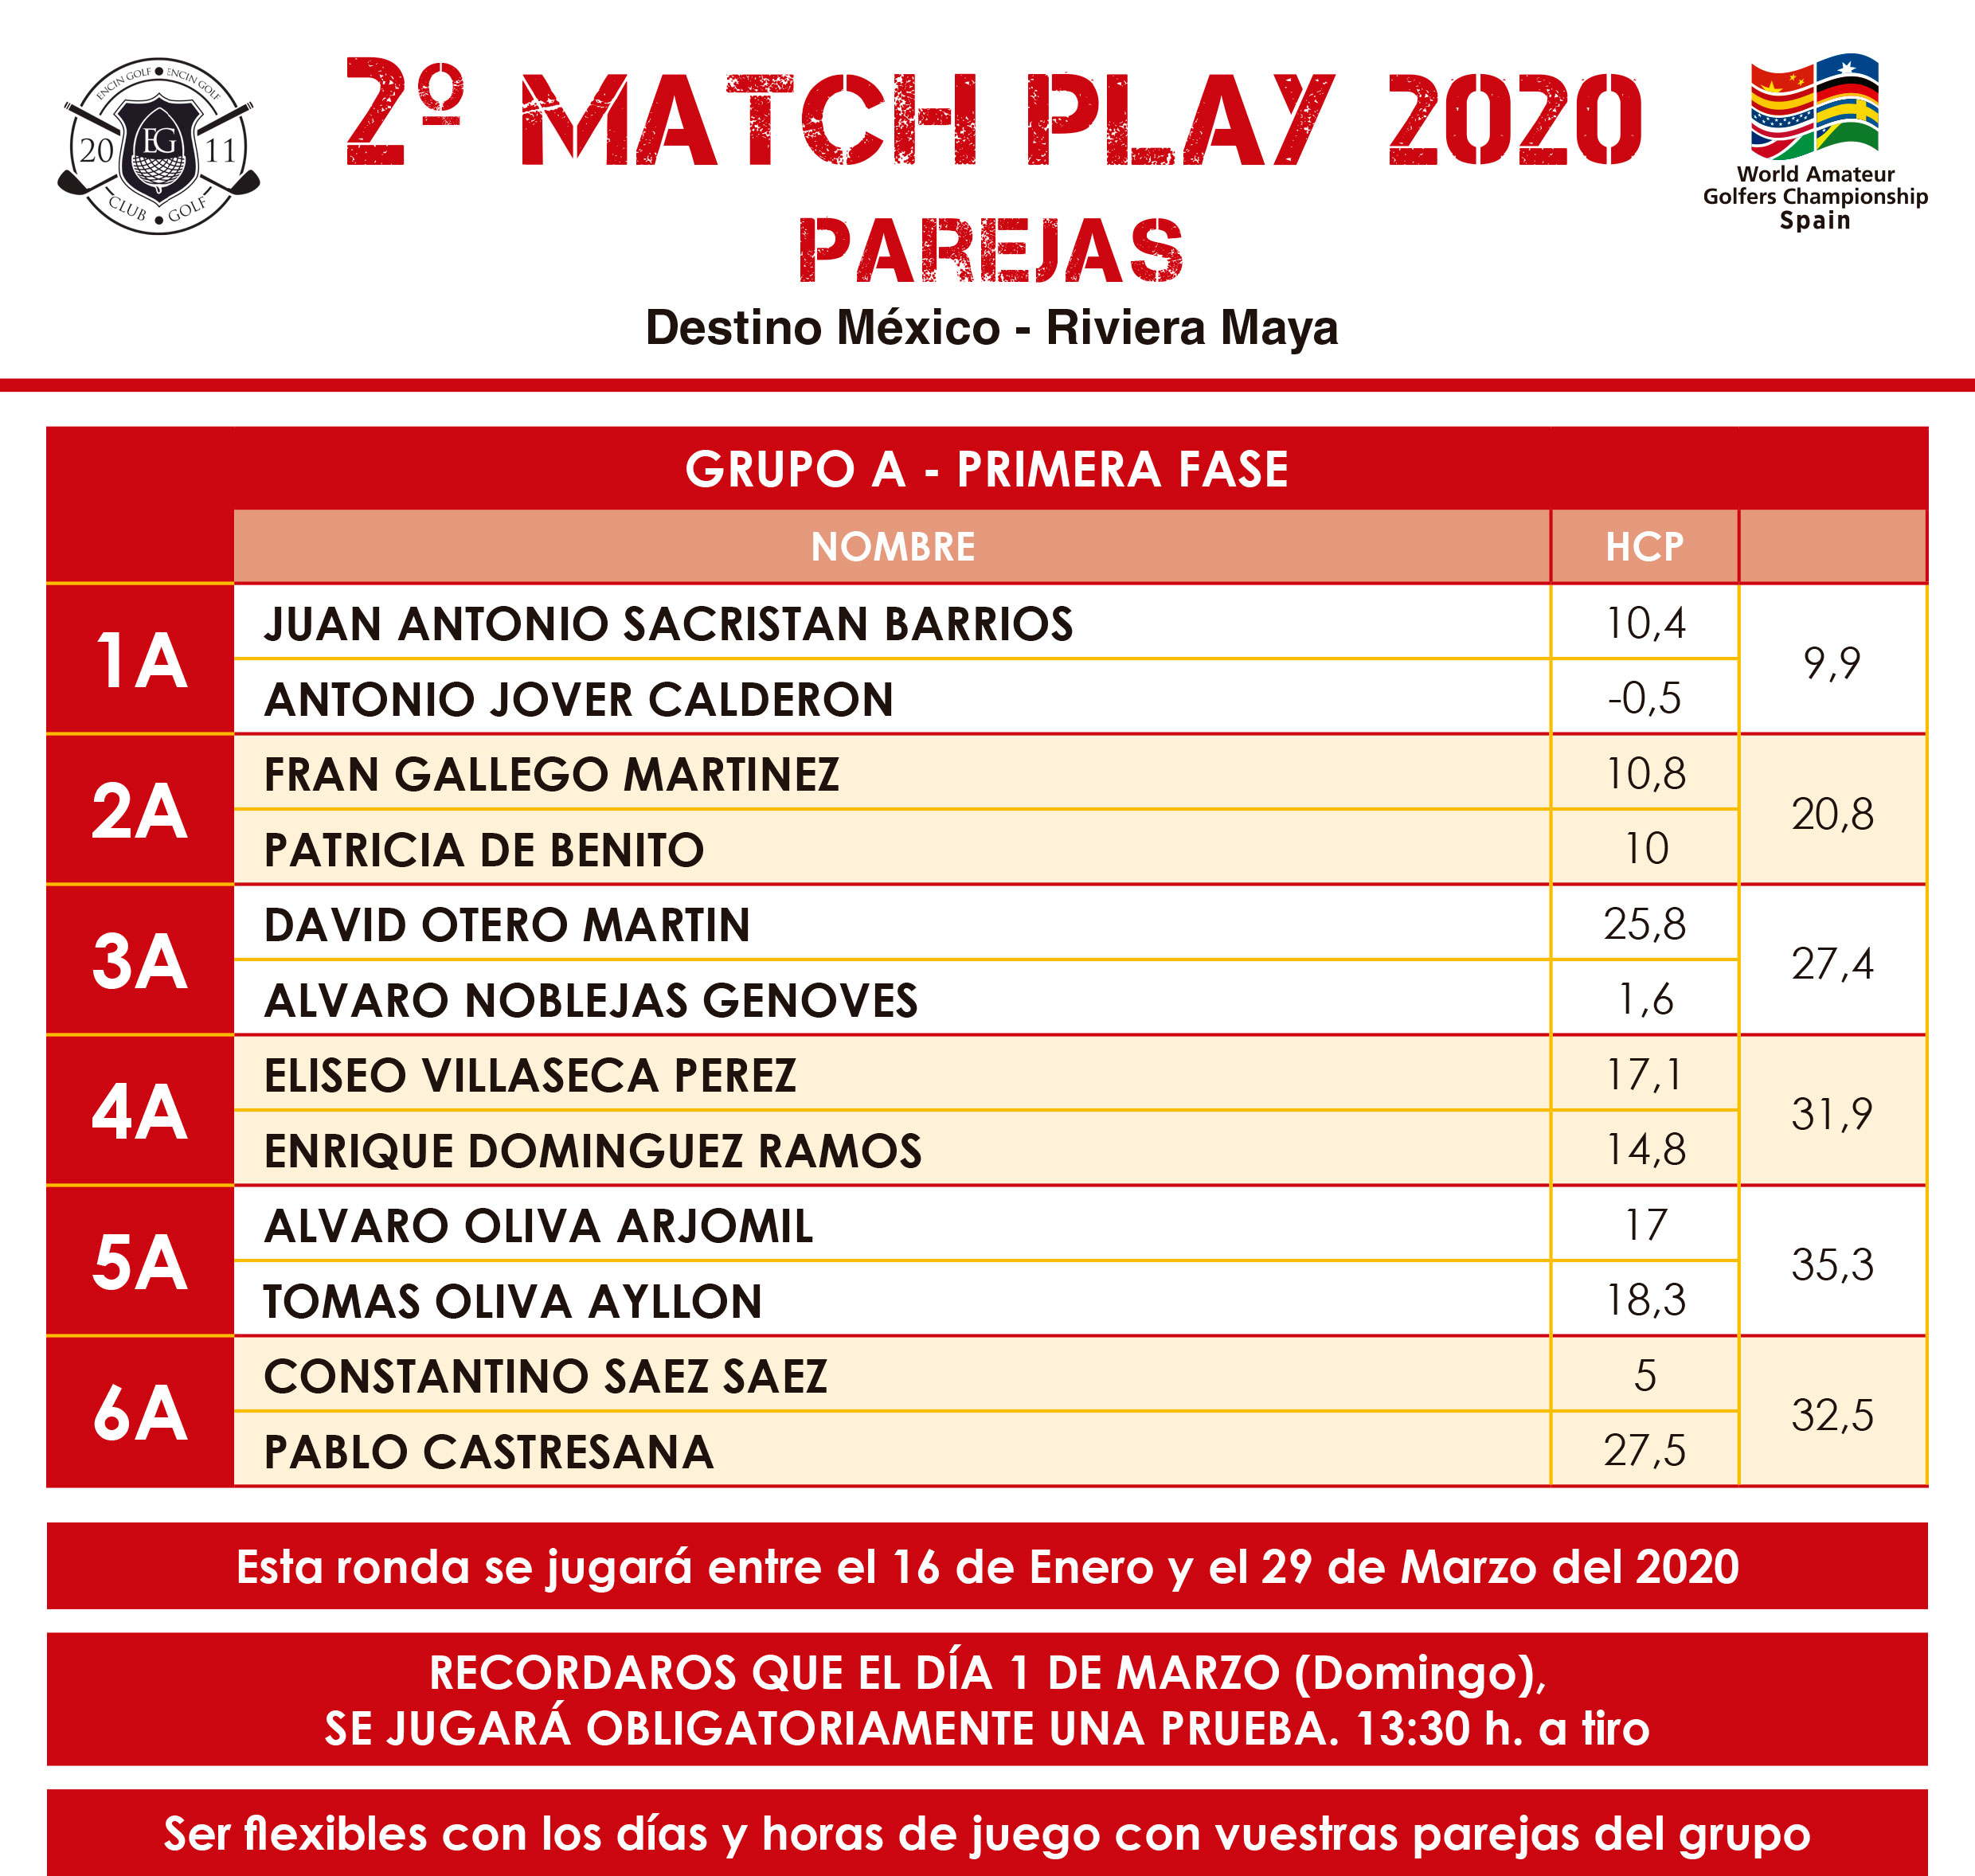 WAGC SPAIN - MATCH PLAY 2020 PAREJAS - 1ª FASE - GRUPO A